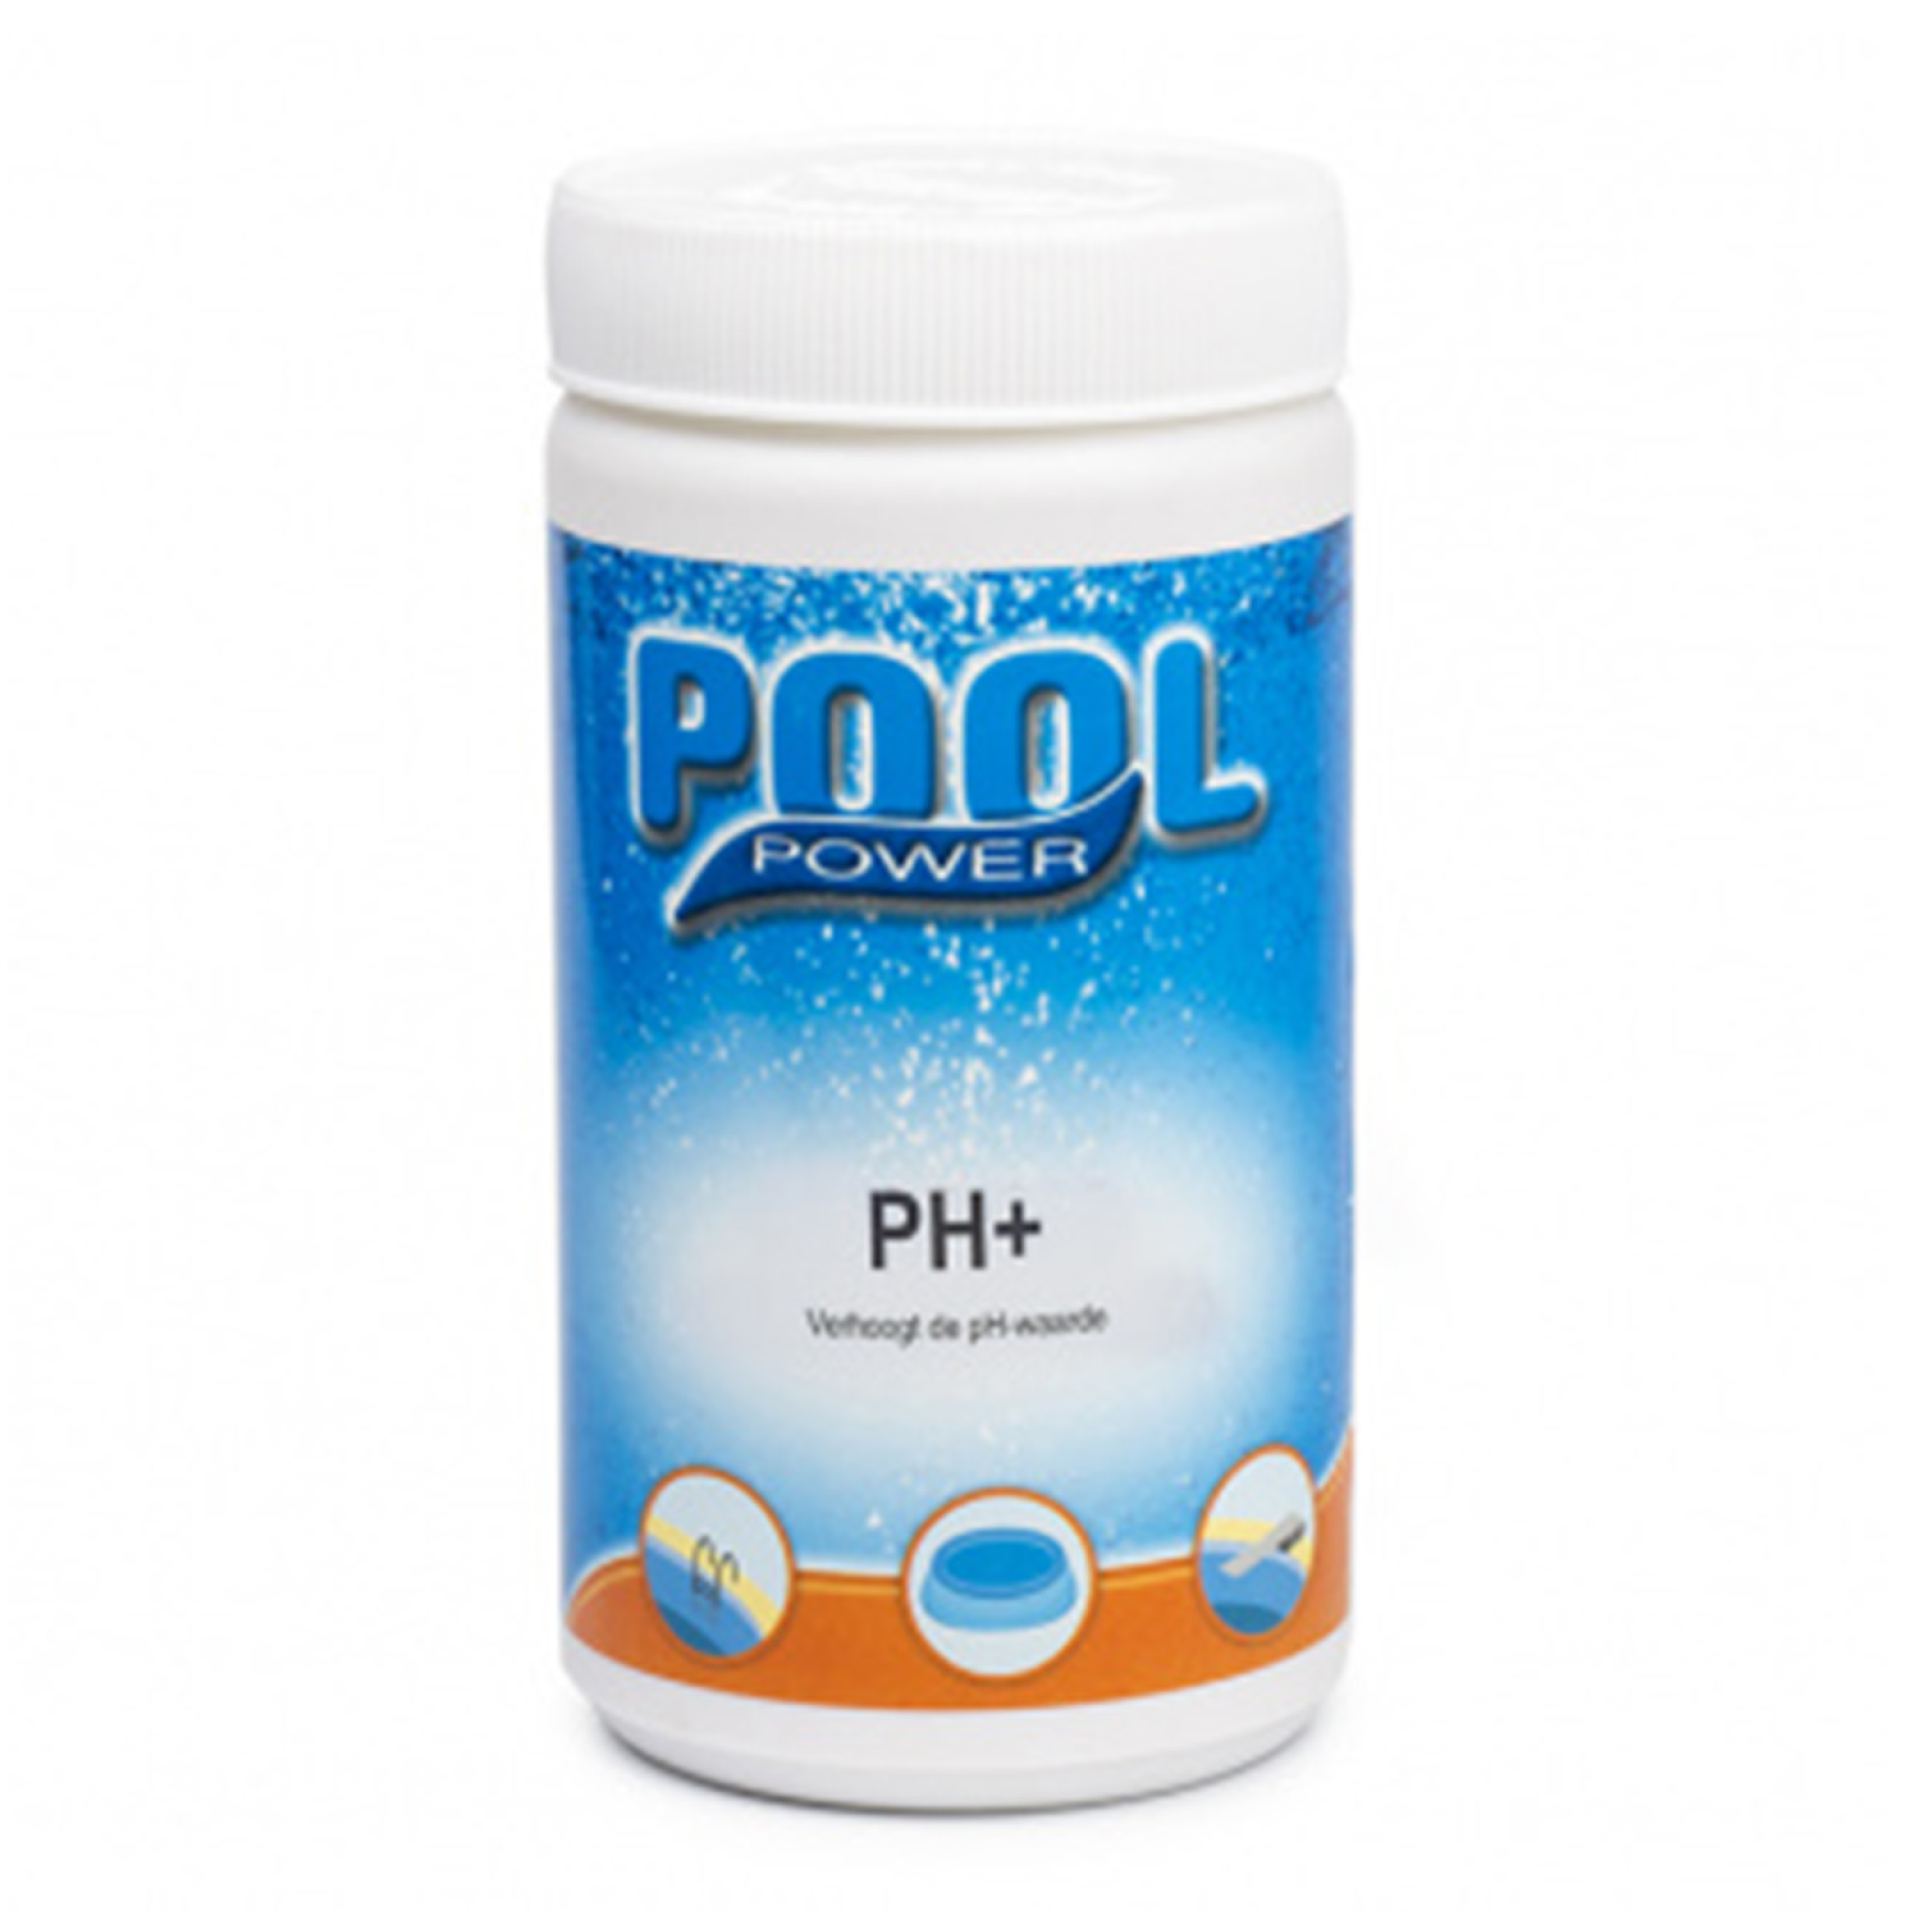 Pool power PH+ 1kg